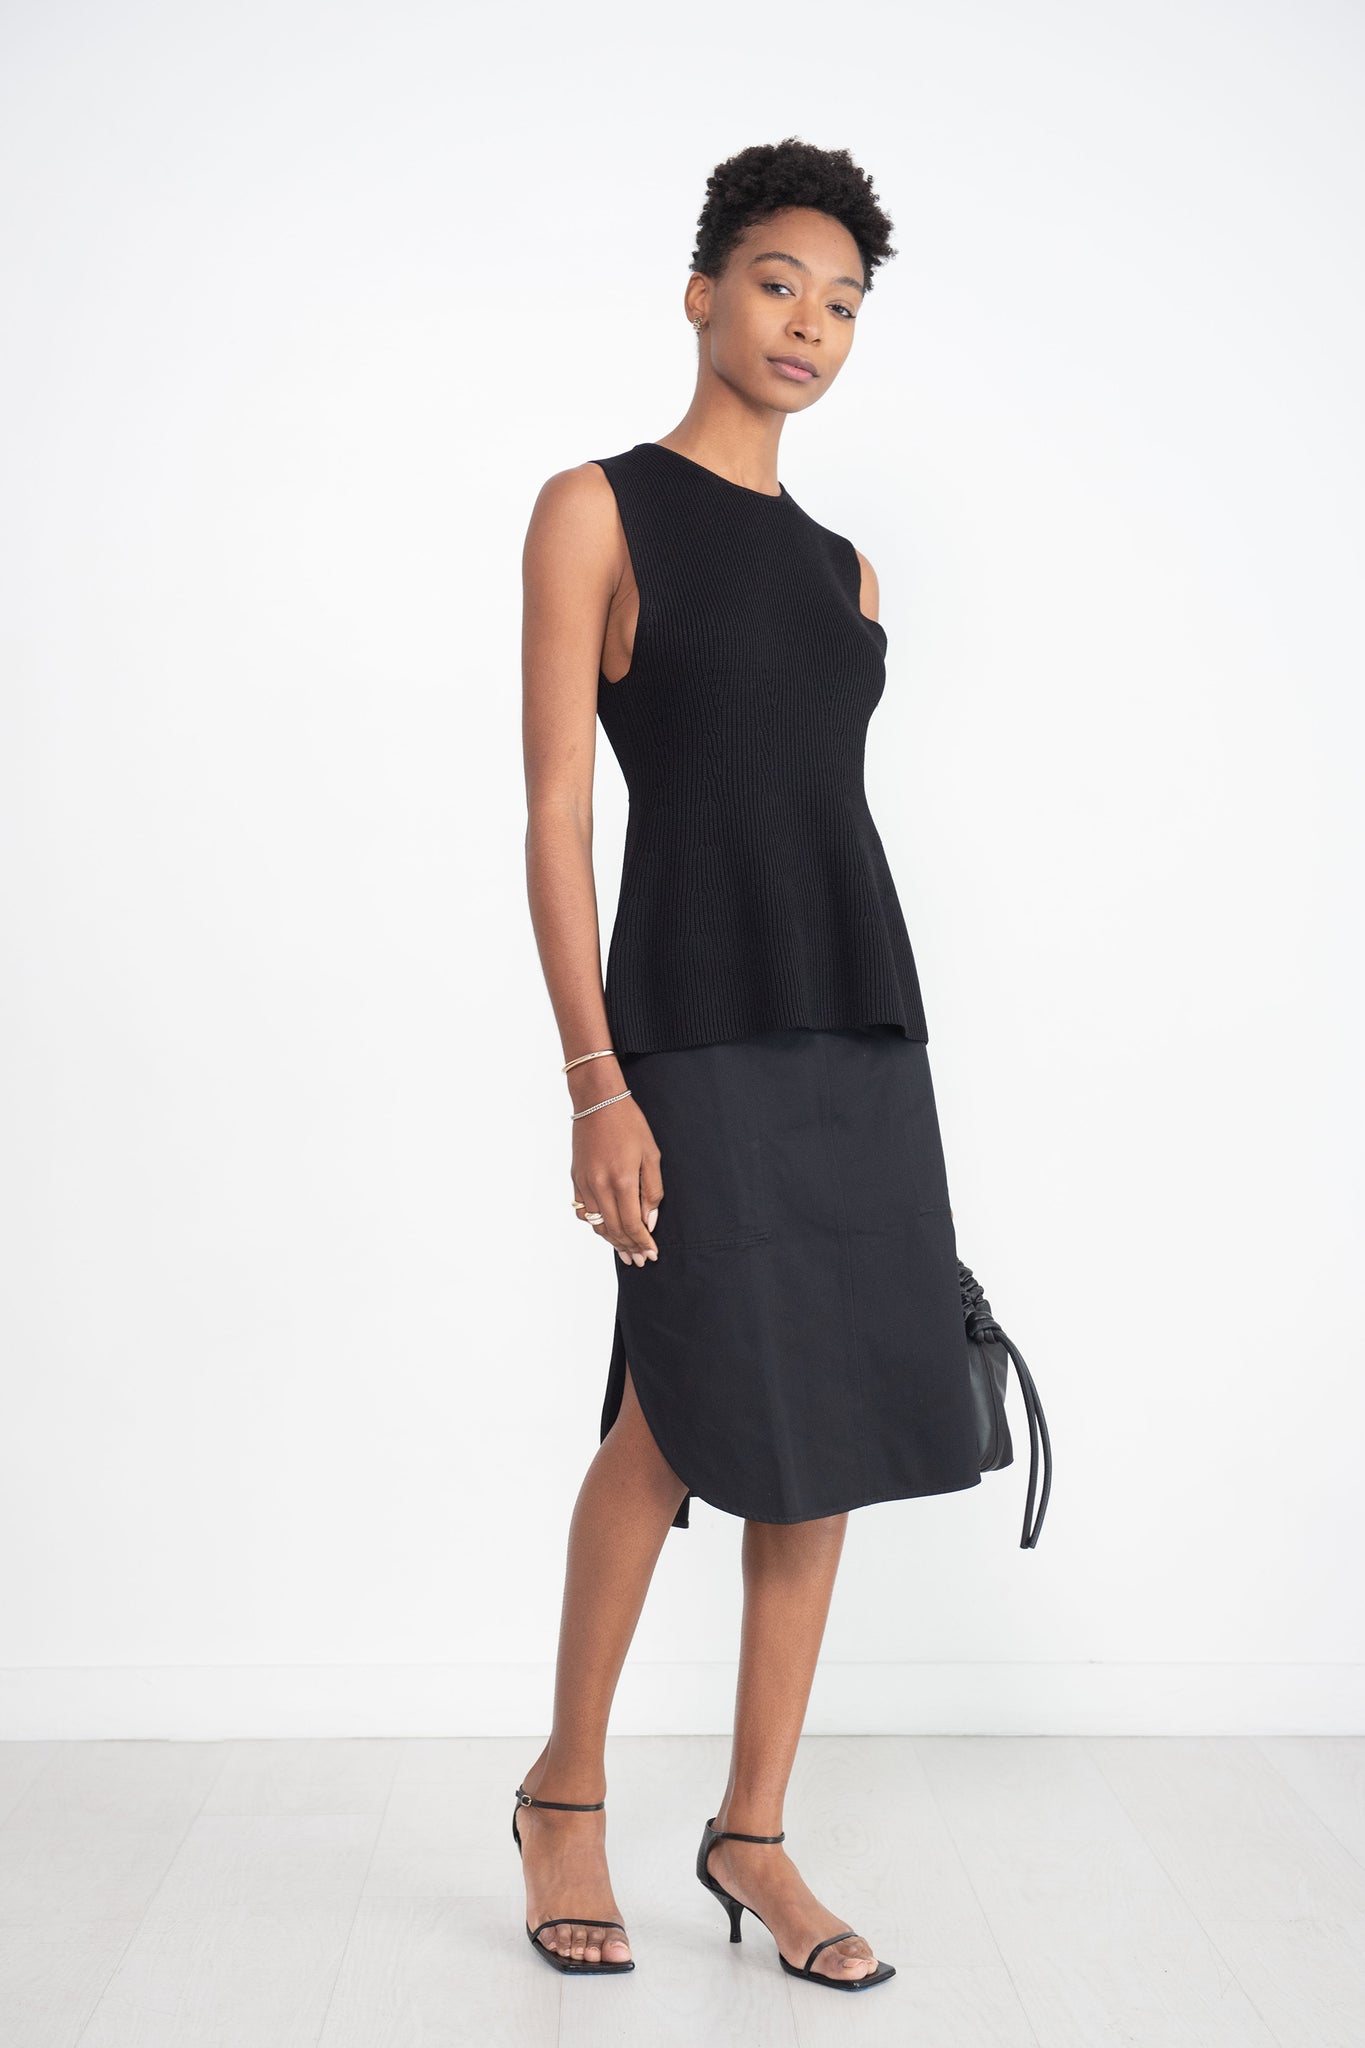 Totême - Curved-hem Cotton Skirt, Black